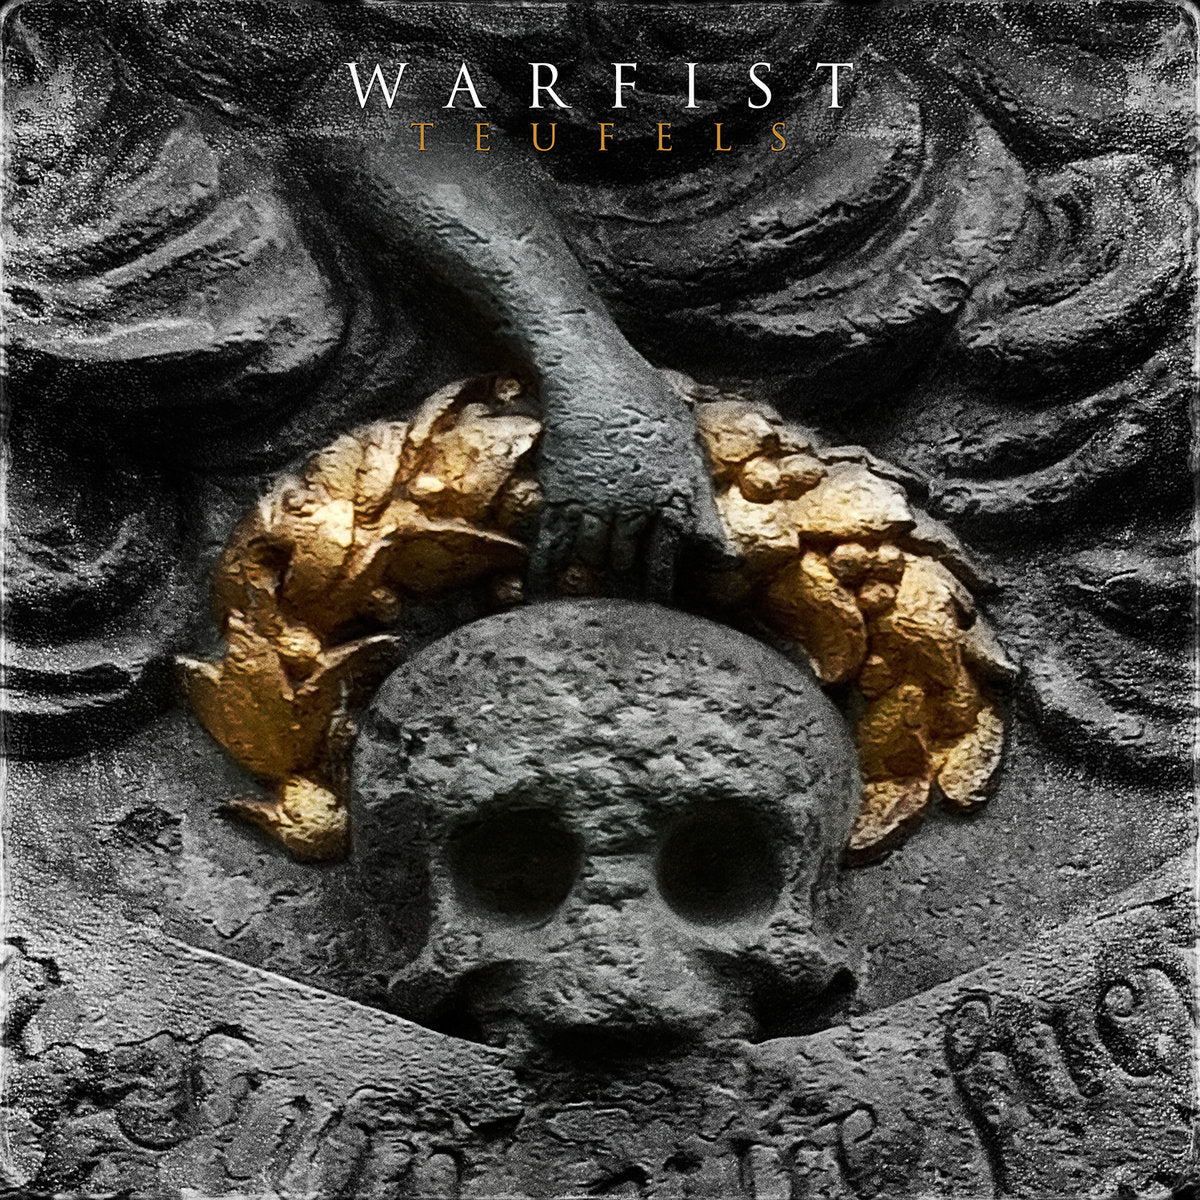 WARFIST - Teufels CD